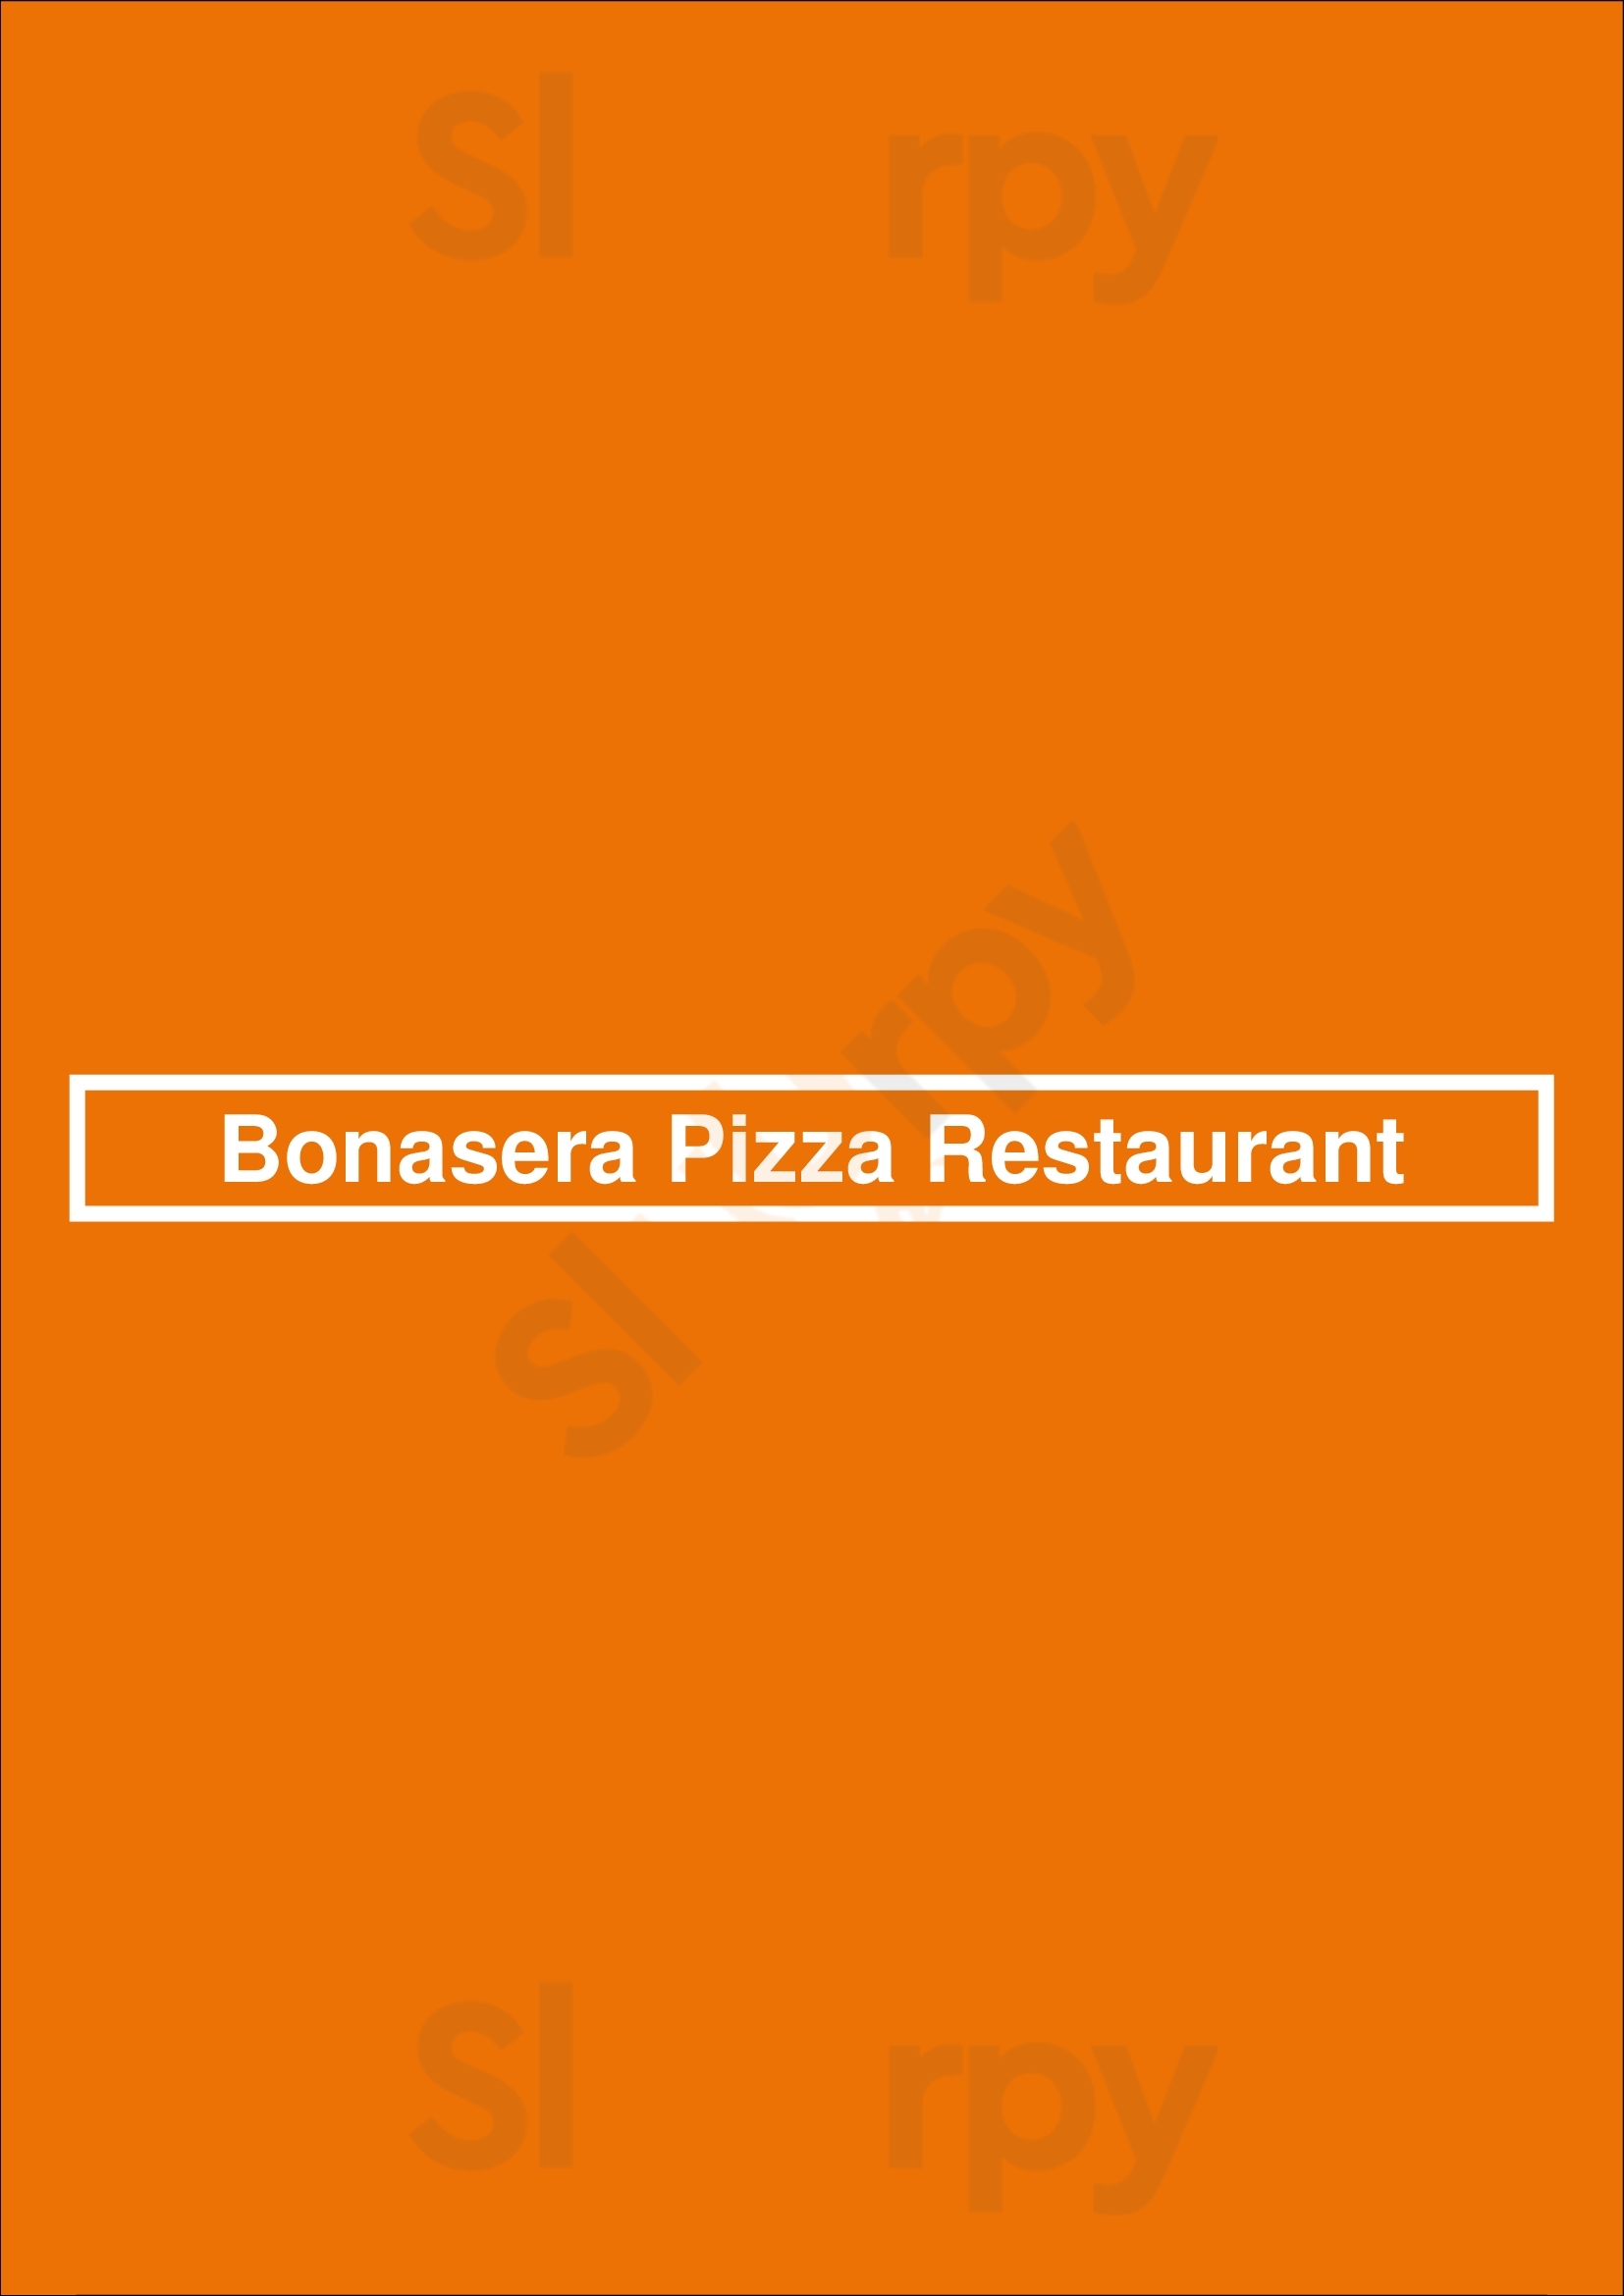 Bonasera Pizza Restaurant Calgary Menu - 1